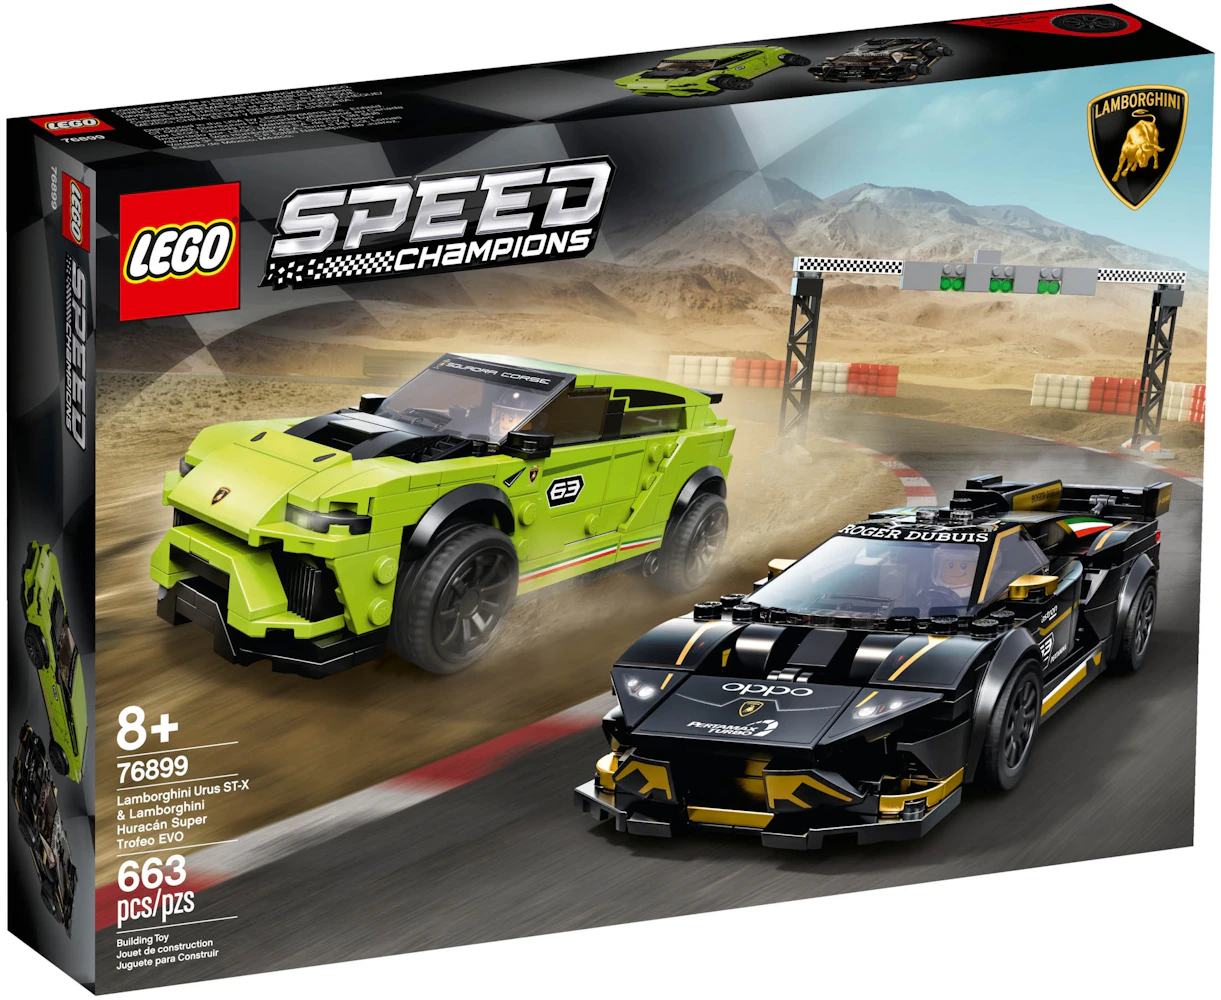 https://images.stockx.com/images/LEGO-Speed-Champions-Lamborghini-Urus-ST-X-Lamborghini-Huracan-Super-Trofeo-EVO-Set-76899.jpg?fit=fill&bg=FFFFFF&w=700&h=500&fm=webp&auto=compress&q=90&dpr=2&trim=color&updated_at=1611606296